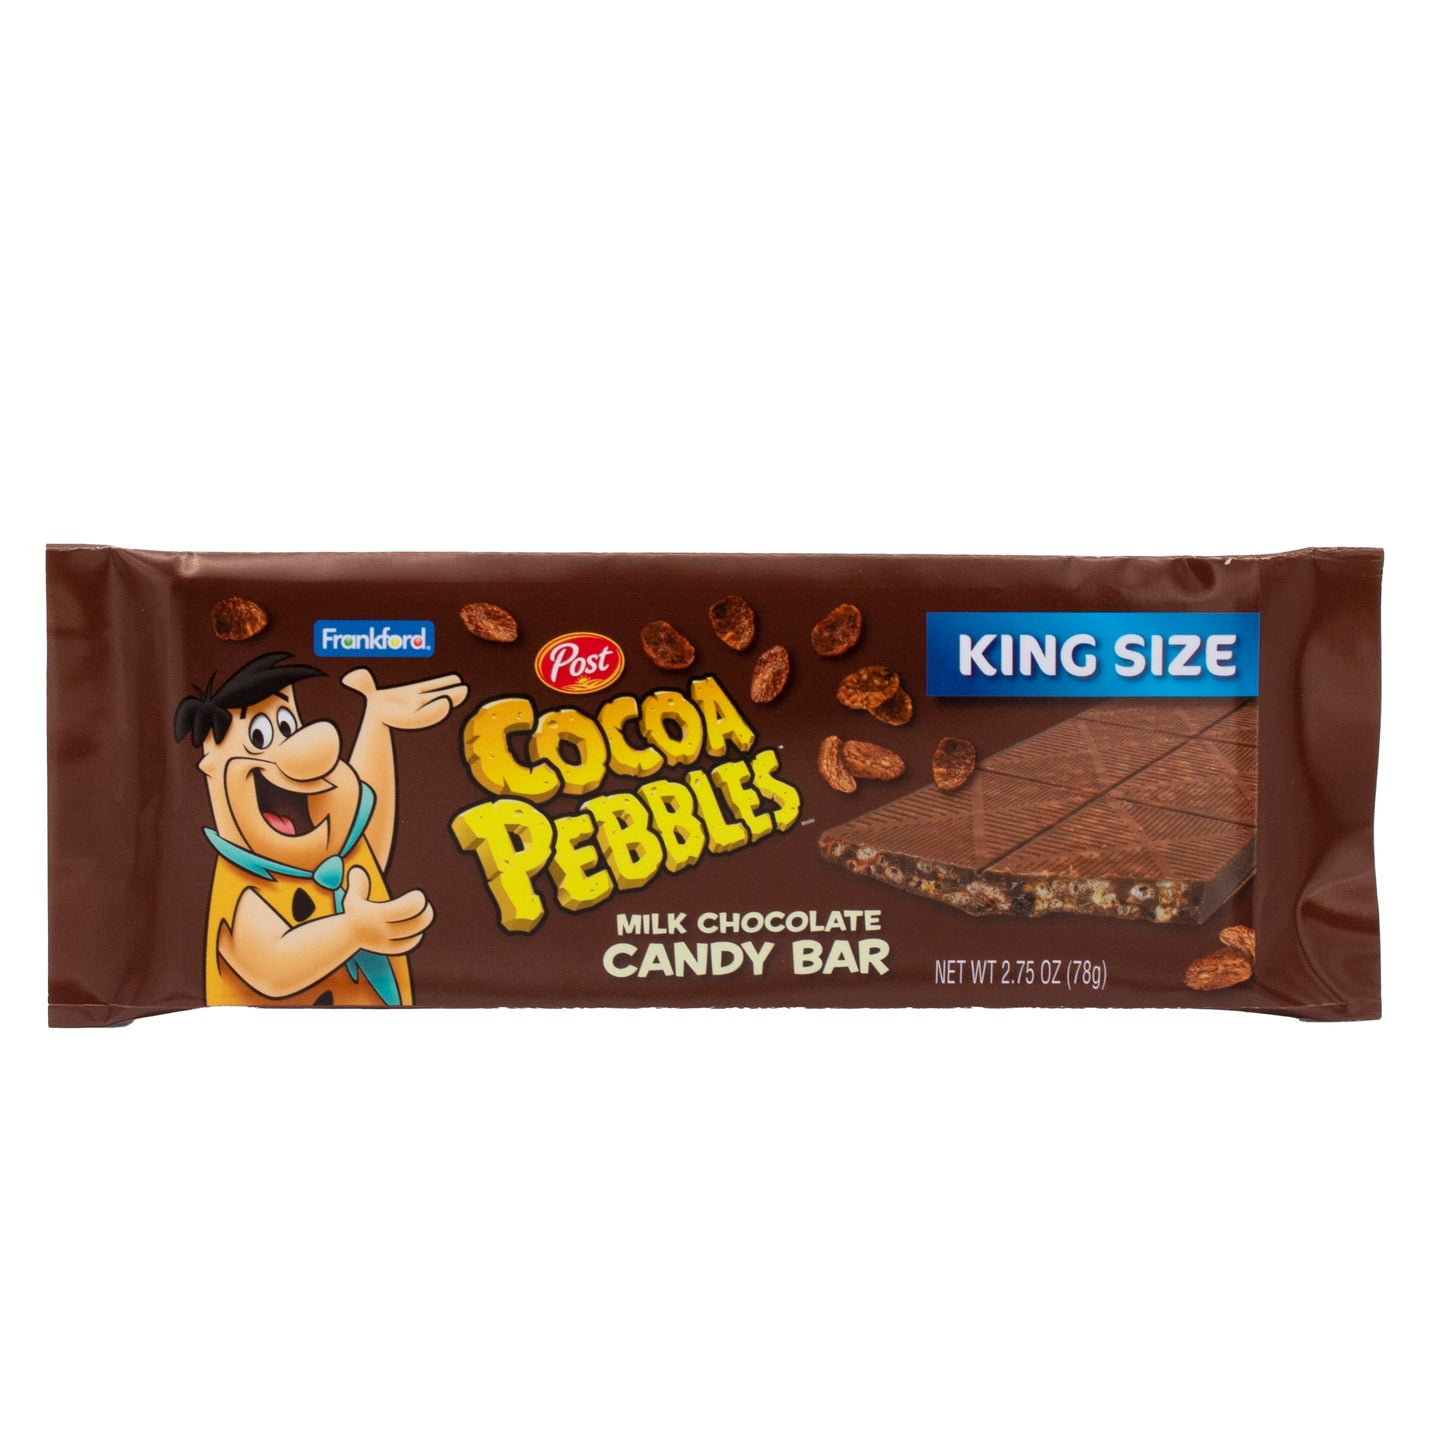 Cocoa Pebbles Chocolate Bar King Size 2.75oz 18ct